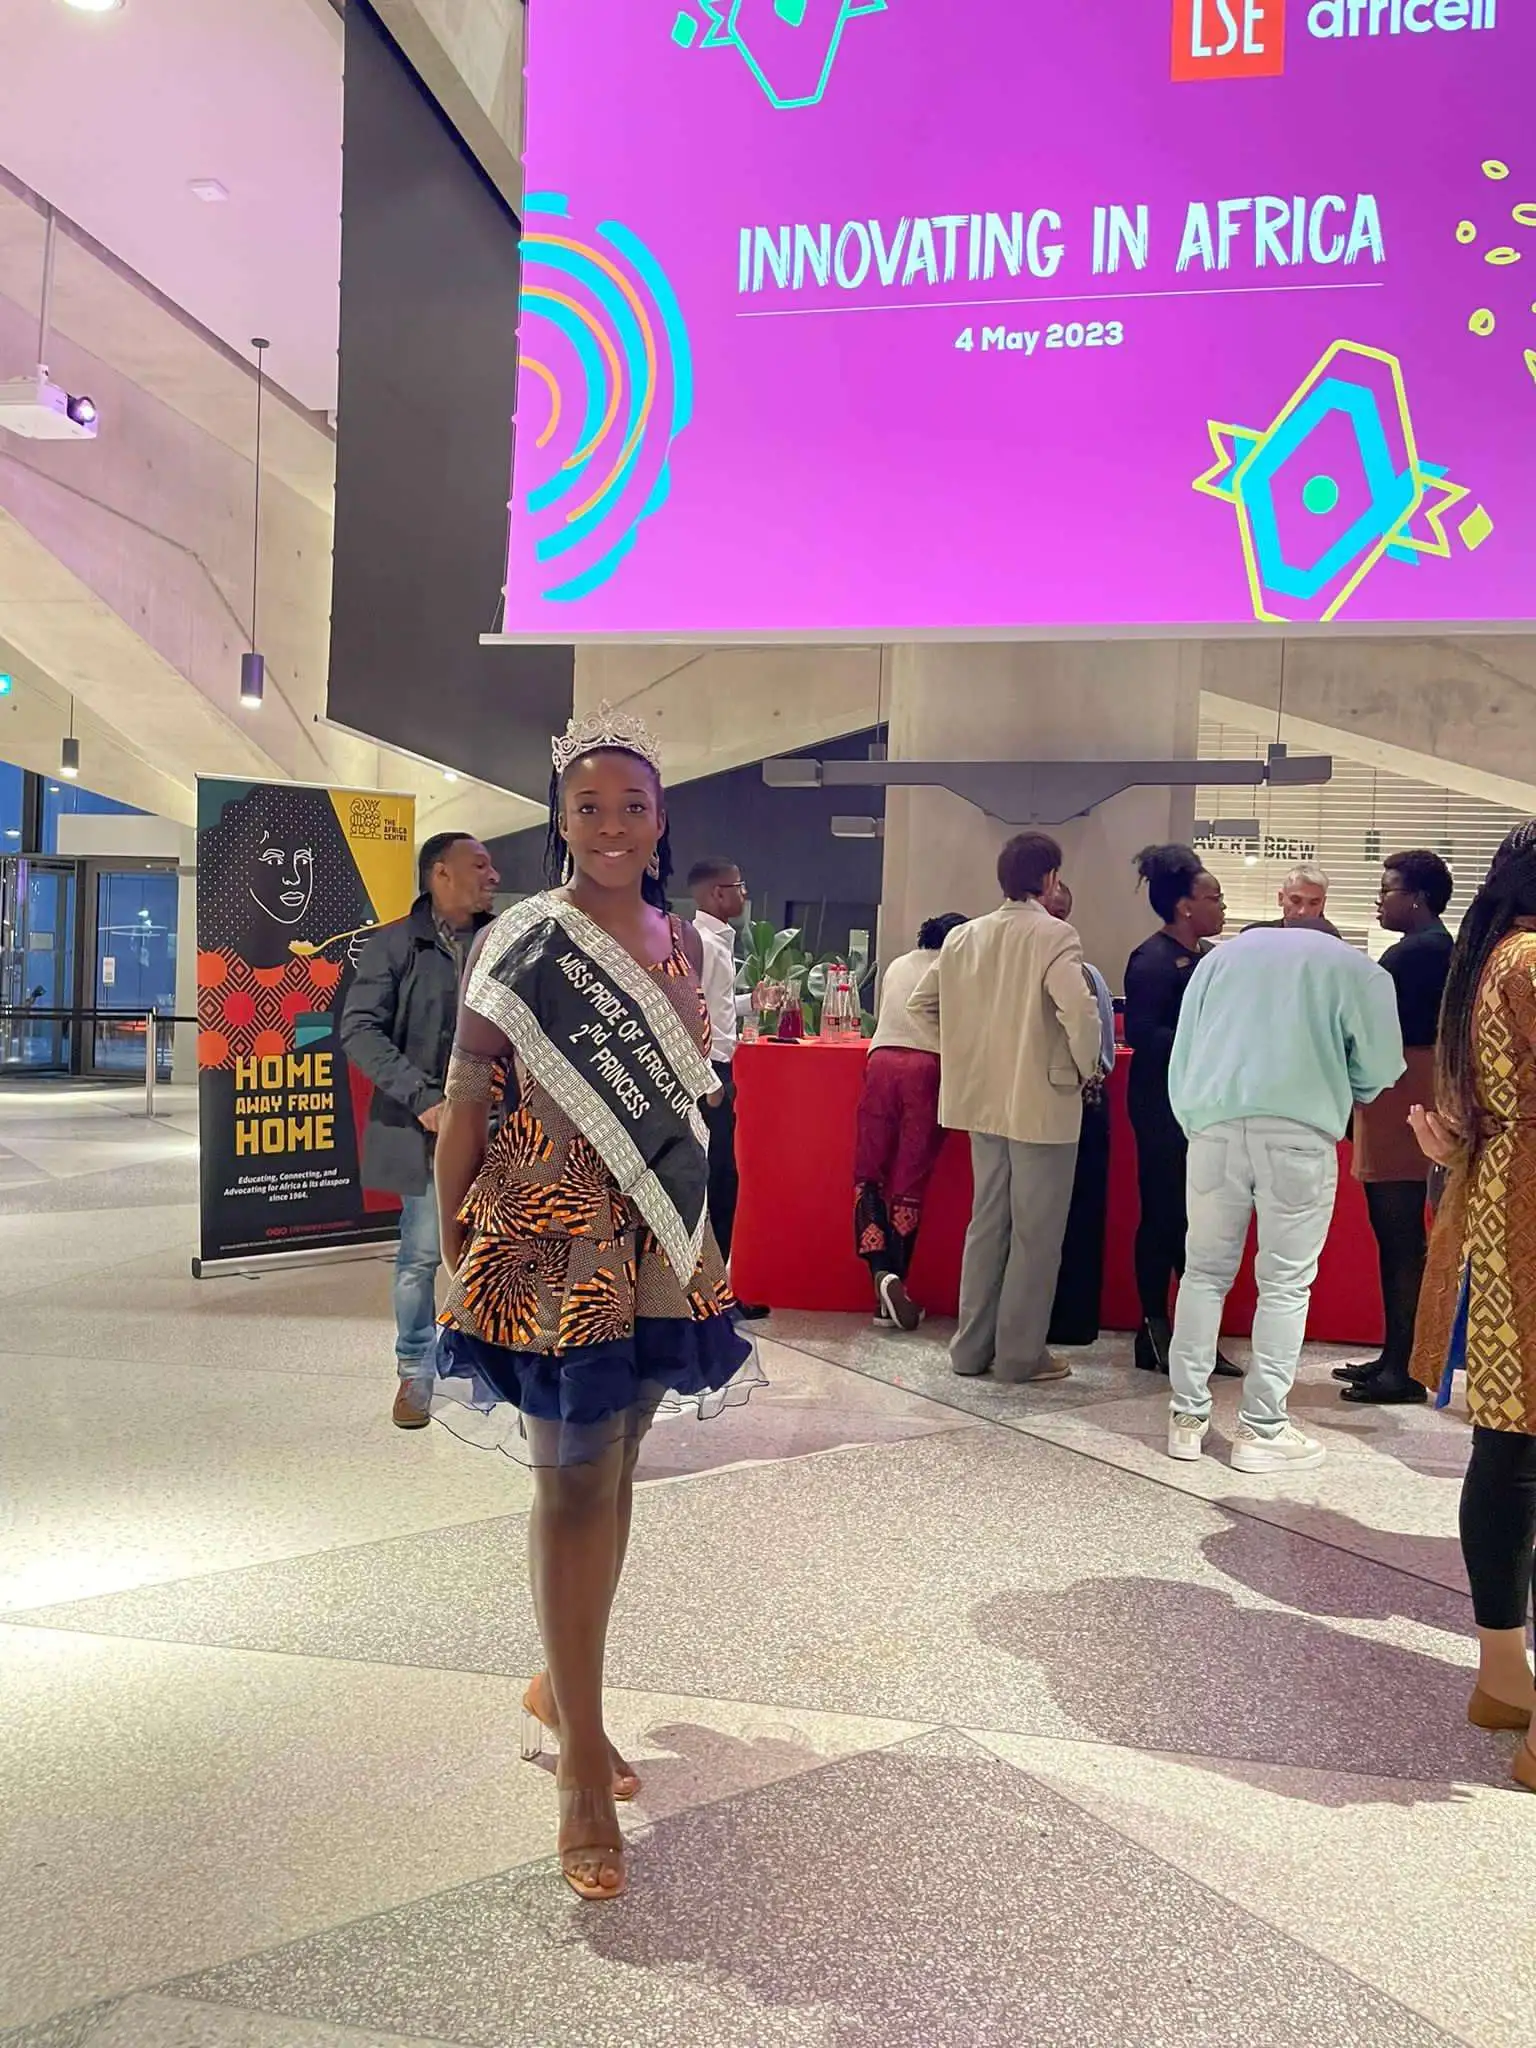 2nd Princess Itiafa Akerejola attending event in Africa